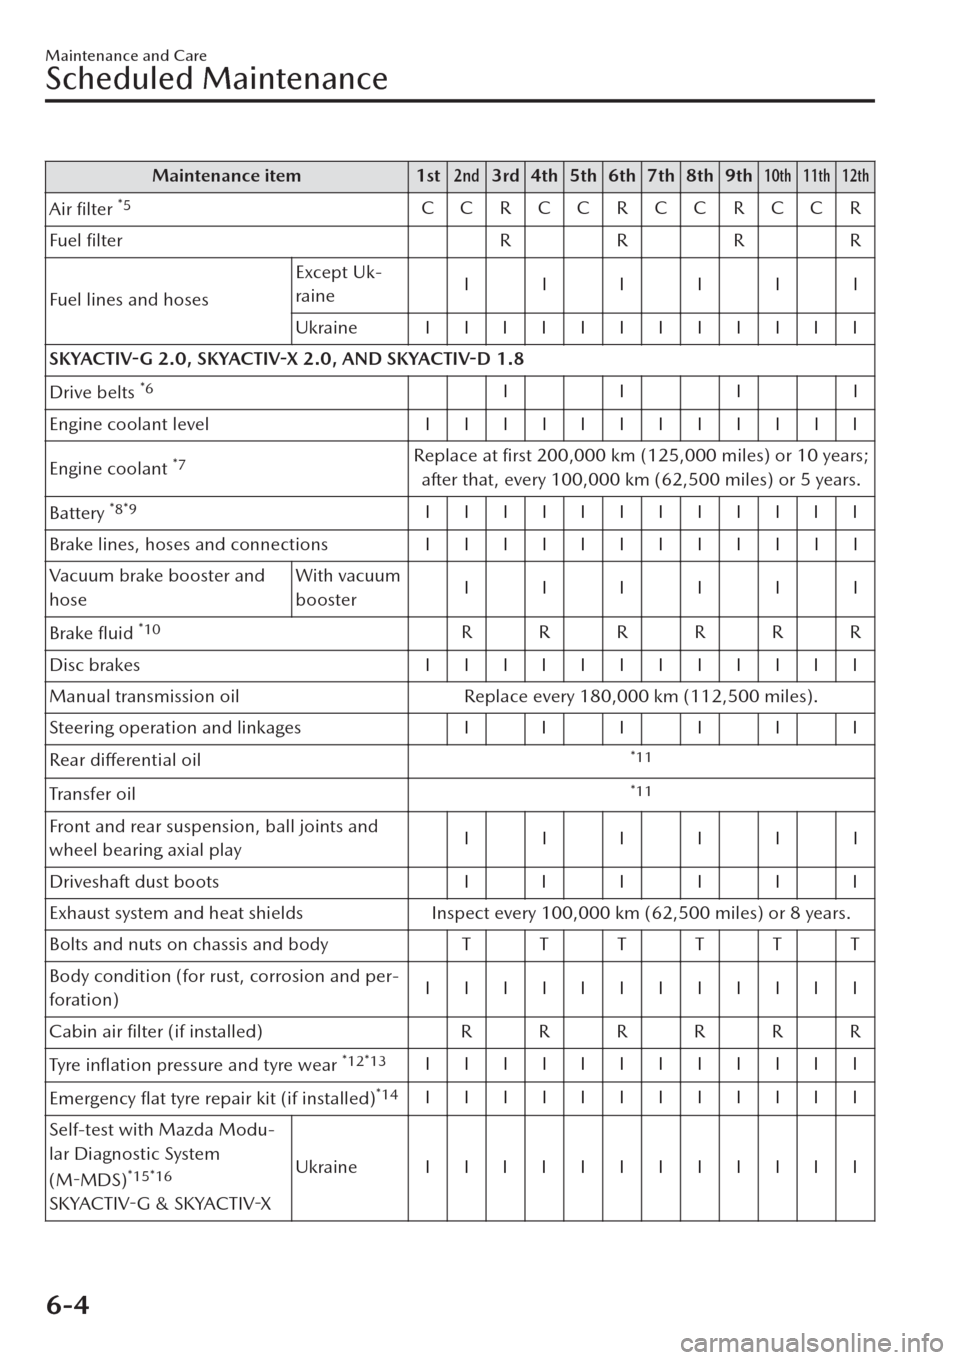 MAZDA MODEL CX-30 2019   (in English) Service Manual Maintenance item 1st2nd3rd 4th 5th 6th 7th 8th 9th10th 11th 12th
Air ﬁlter *5CCRCCRCCRCCR
Fuel ﬁlter RRRR
Fuel lines and hosesExcept Uk-
raineIIIIII
Ukraine IIIIIIIIIIII
SKYACTIV-G 2.0, SKYACTIV-X